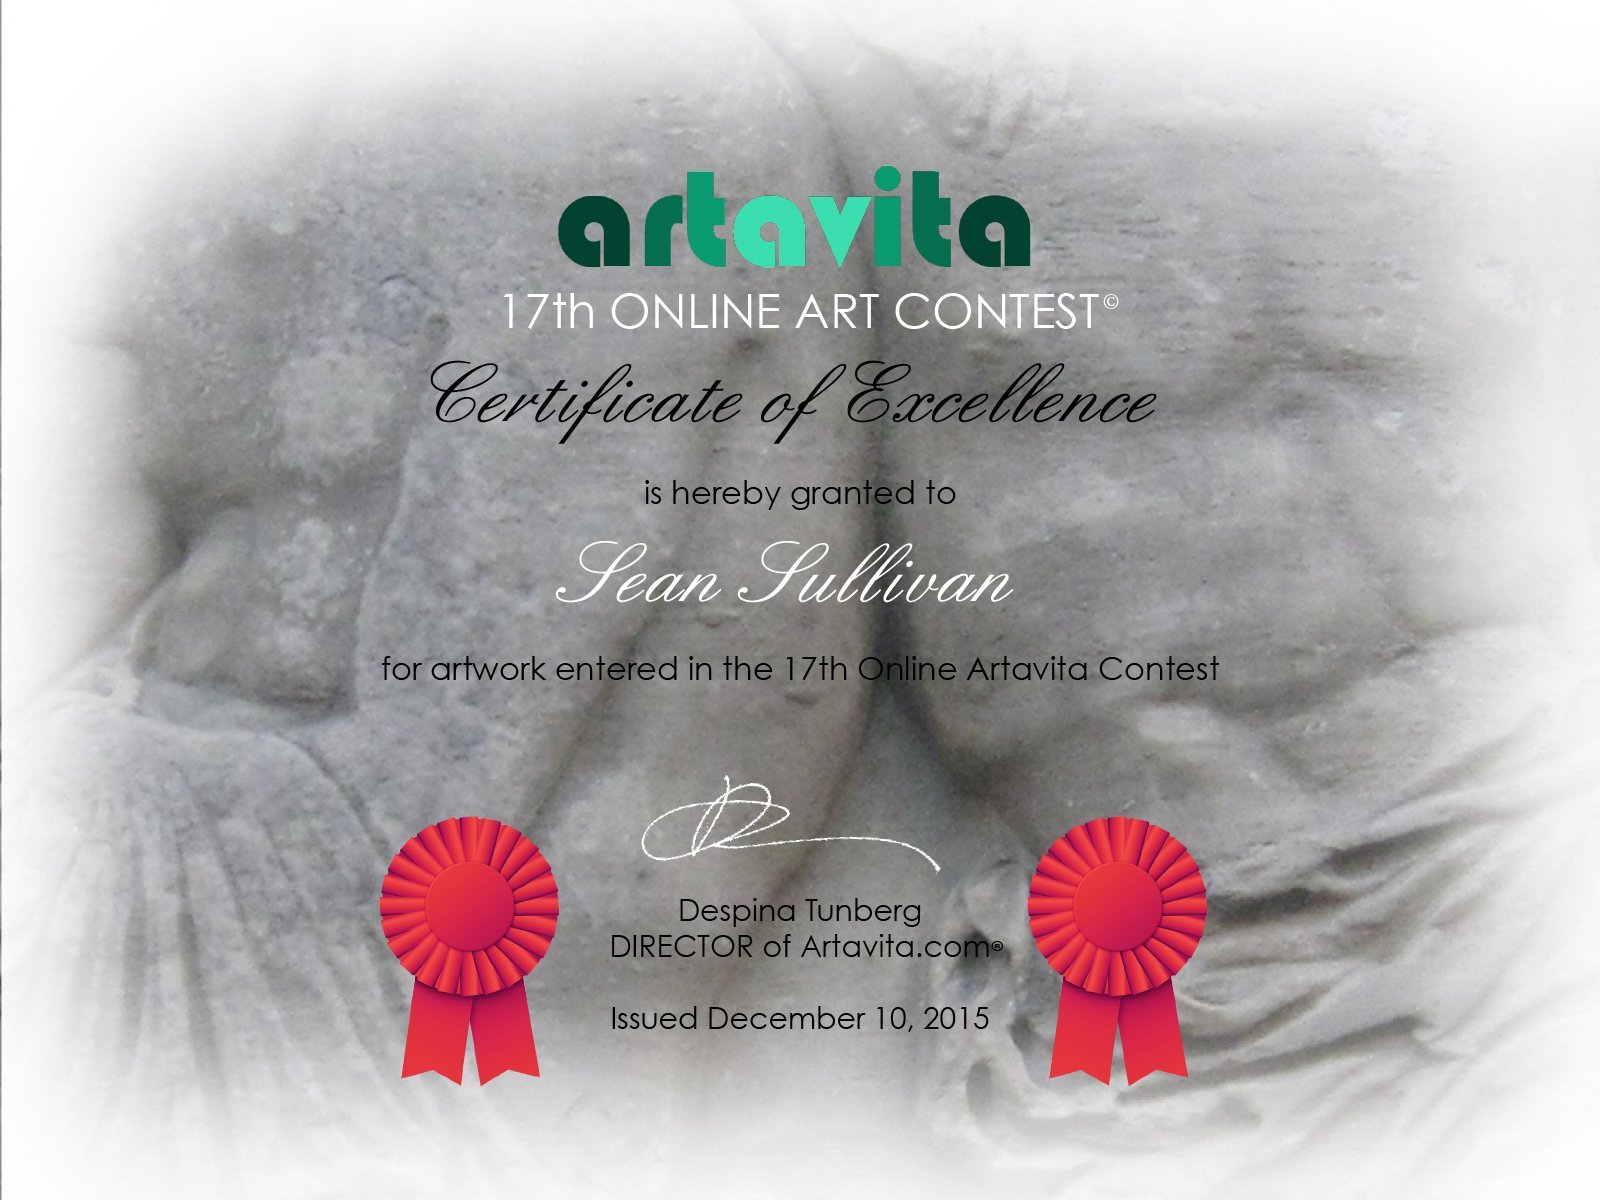 Sean Sullivan ArtavitaContest17_Certificate.jpg